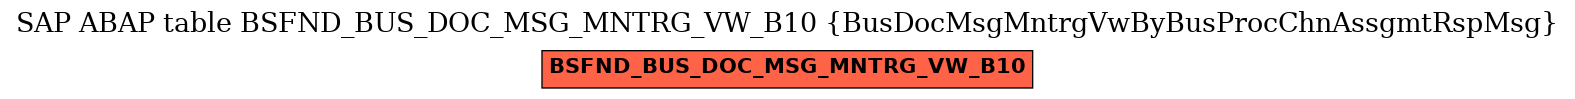 E-R Diagram for table BSFND_BUS_DOC_MSG_MNTRG_VW_B10 (BusDocMsgMntrgVwByBusProcChnAssgmtRspMsg)